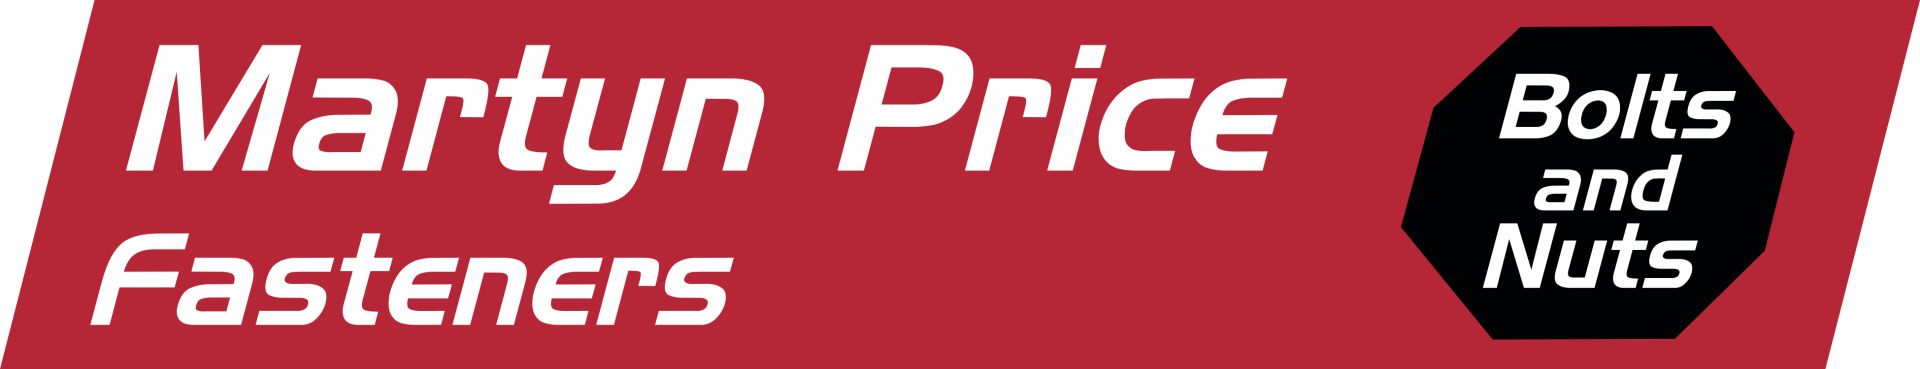 Martyn Price Fasteners Logo